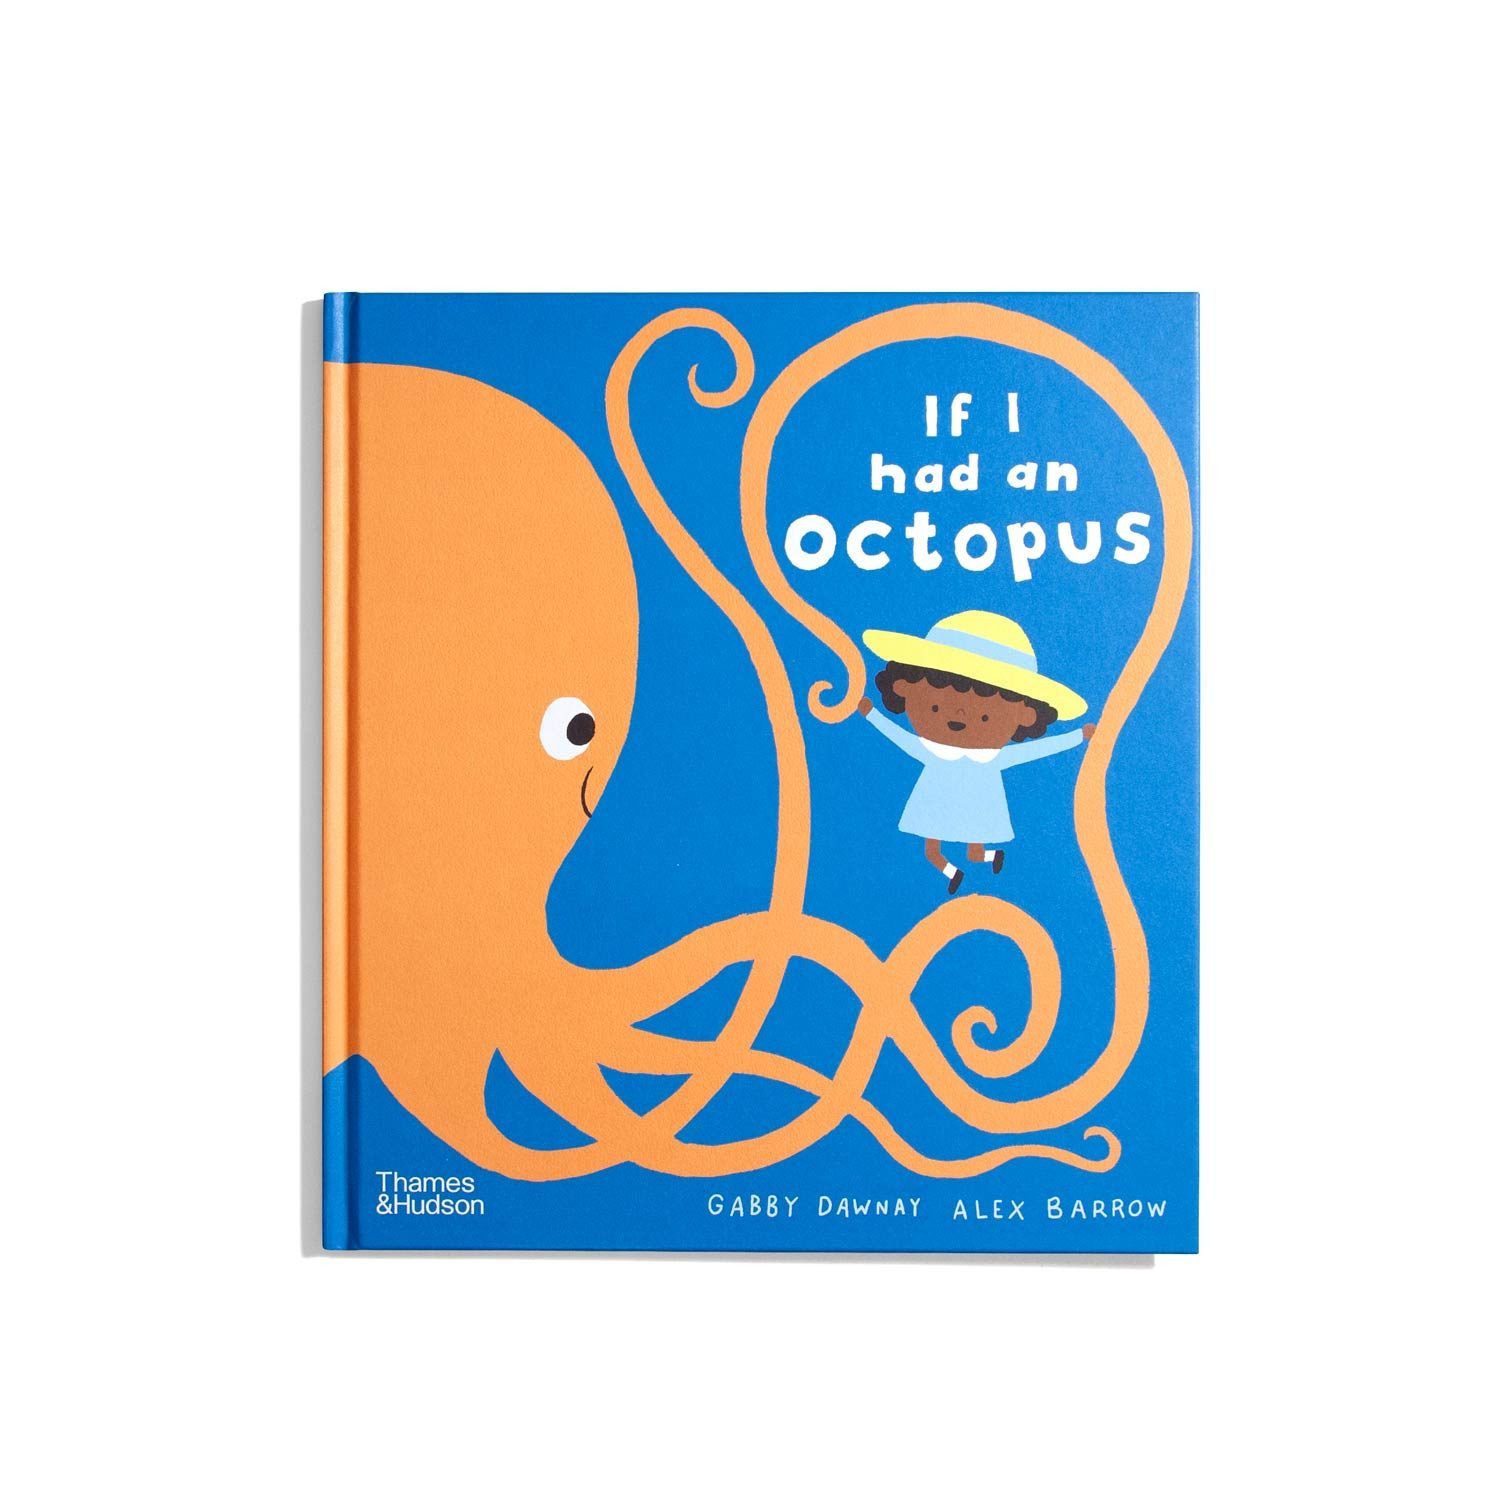 If I had an Octopus - Gabby Dawnay